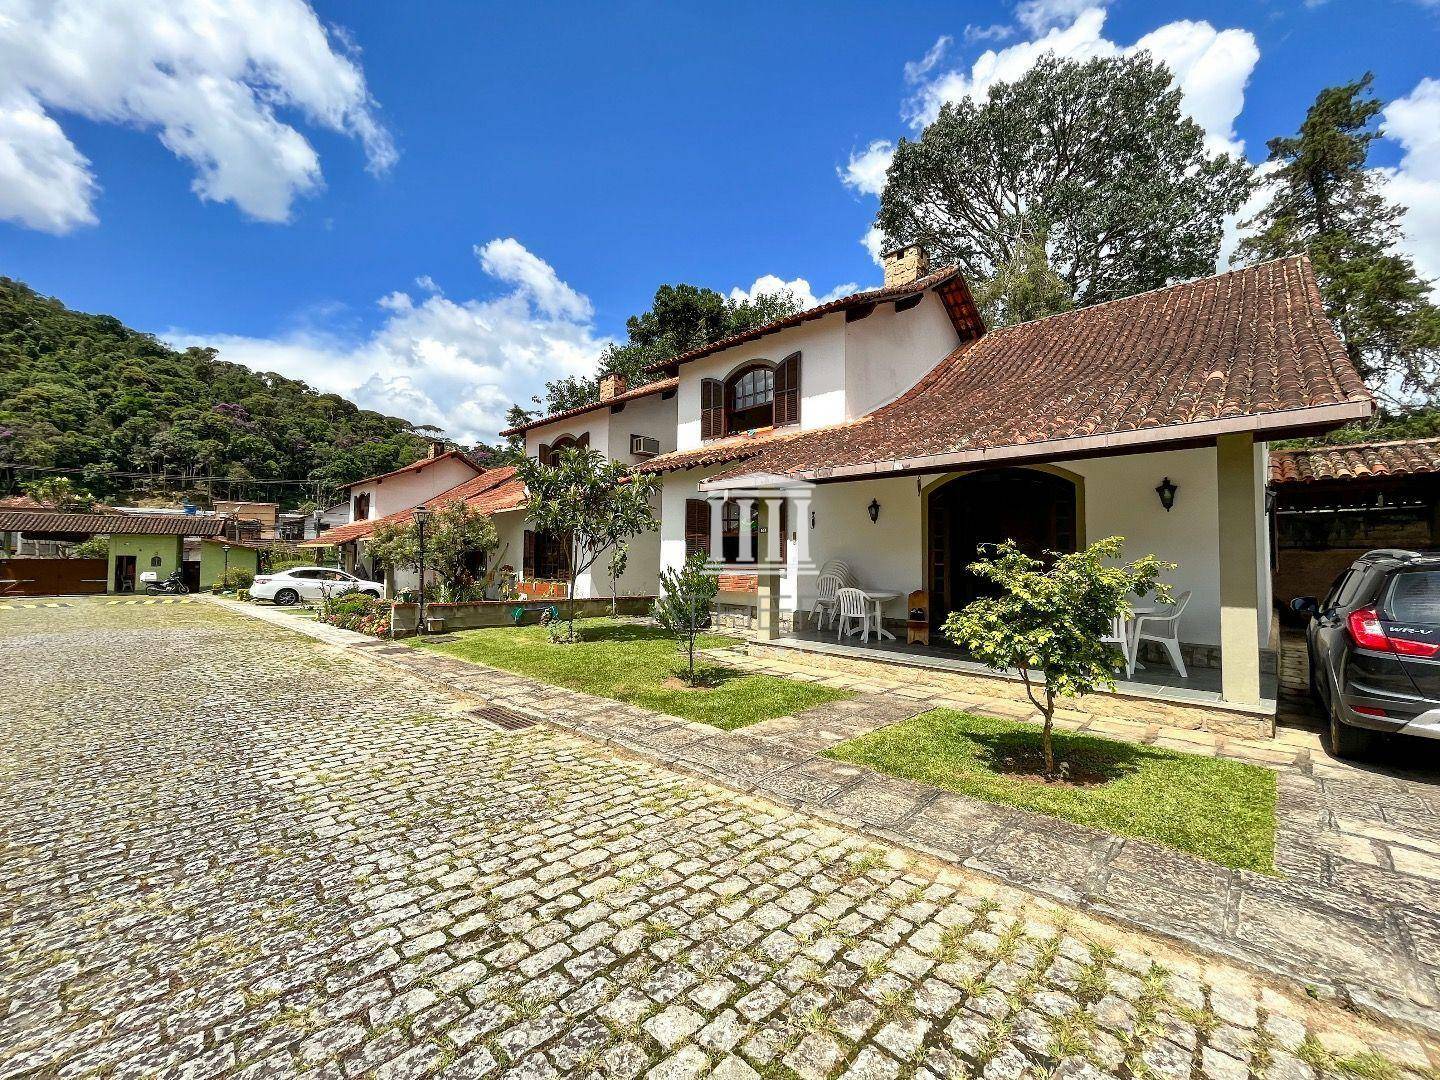 Casa à venda em Várzea, Teresópolis - RJ - Foto 1